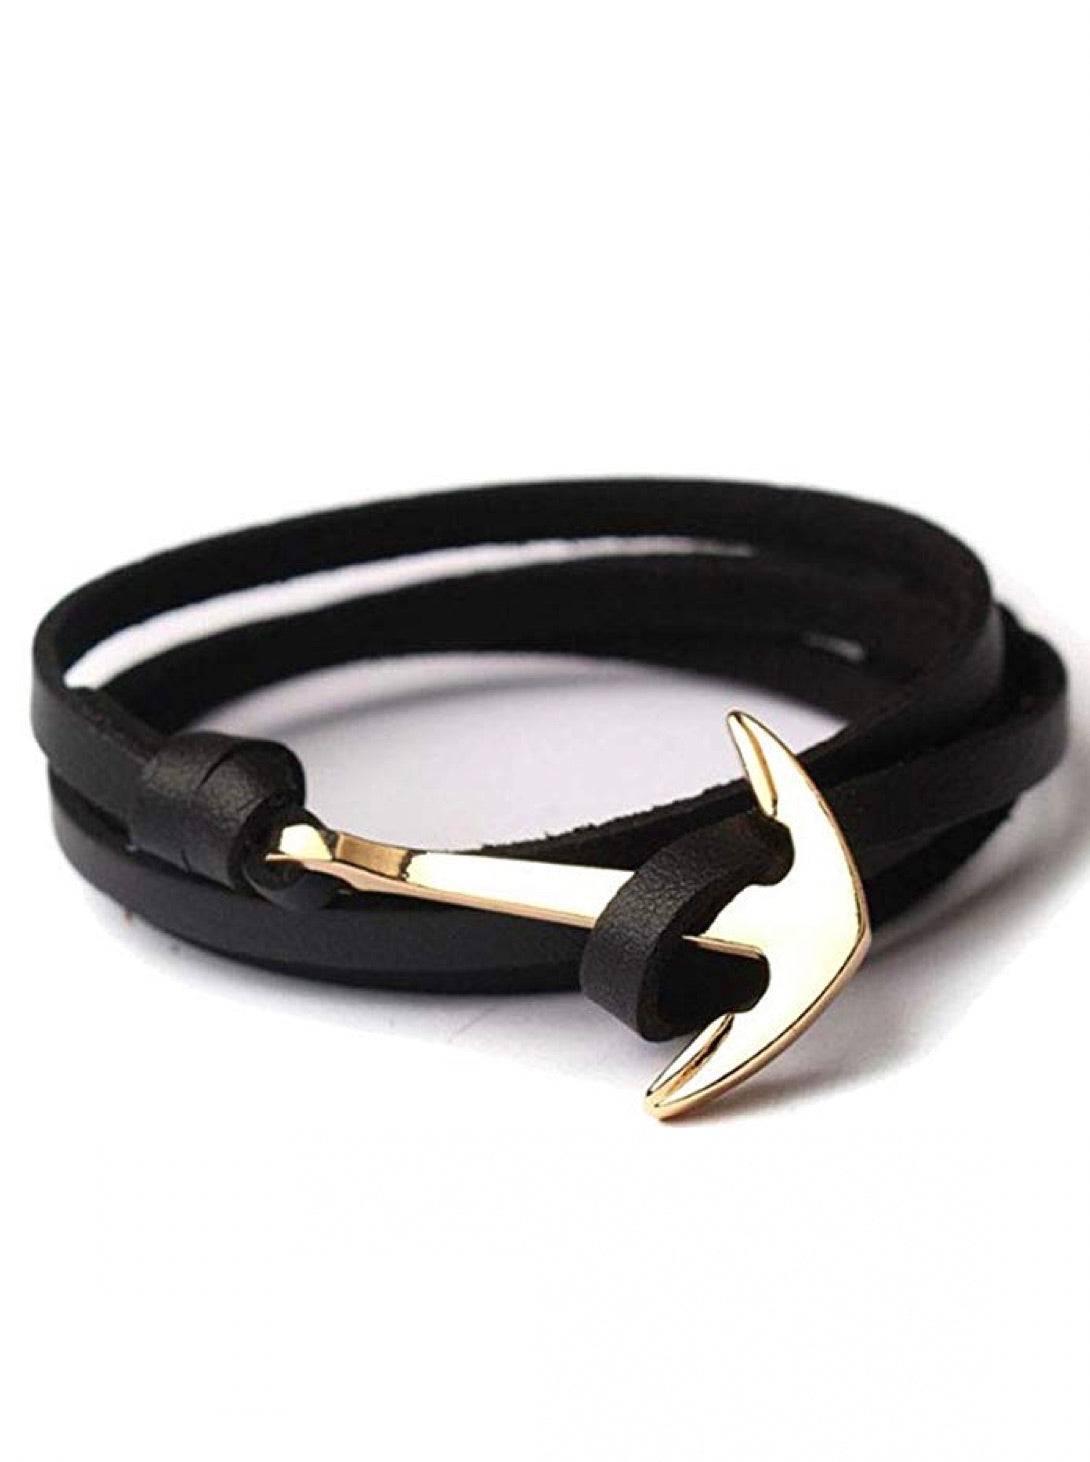 Love Bracelet with anchor. Fashion Jewelry 4u. Free Shipping